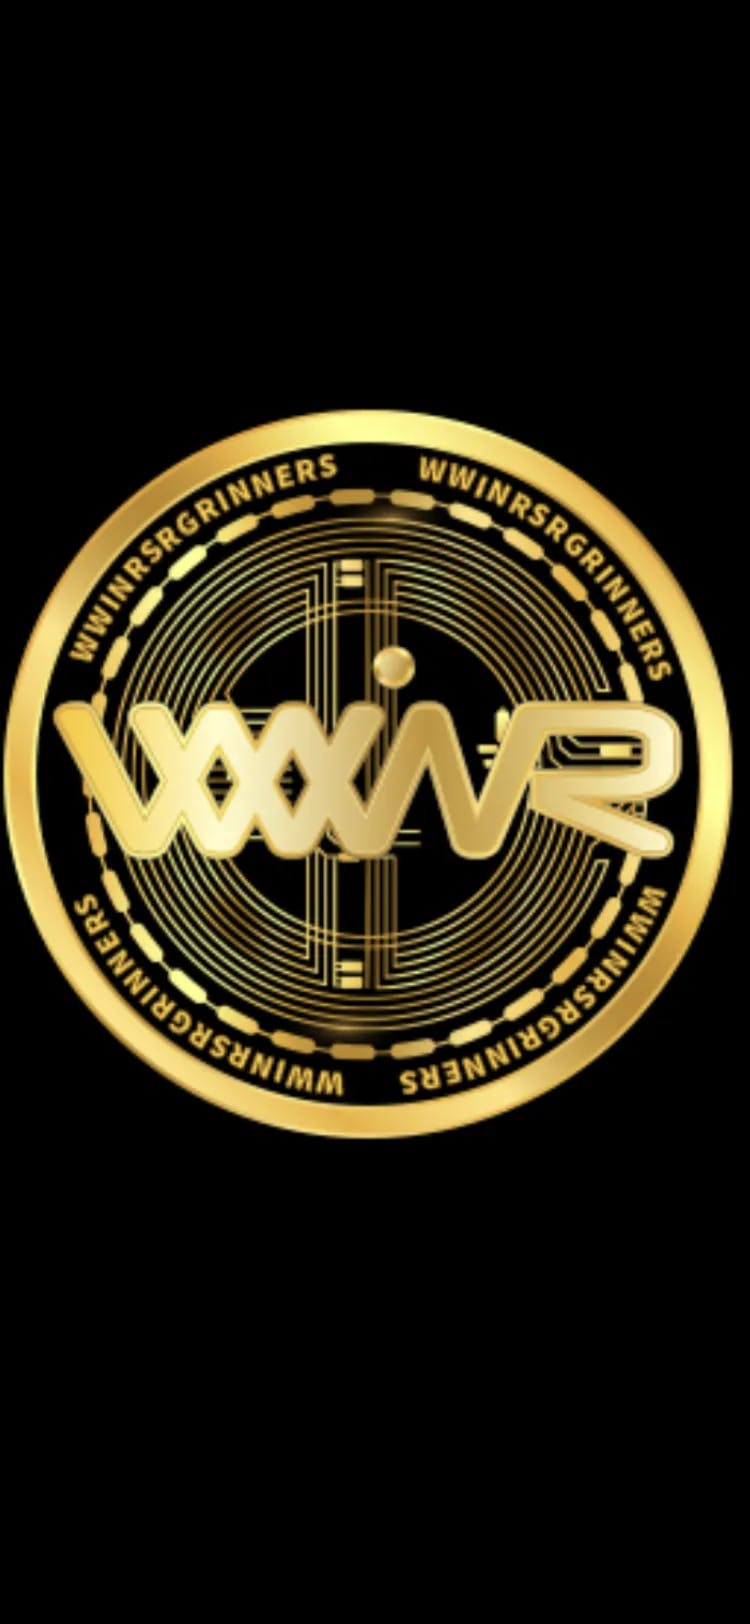 World Wide Investment Network Raffle -WWINR